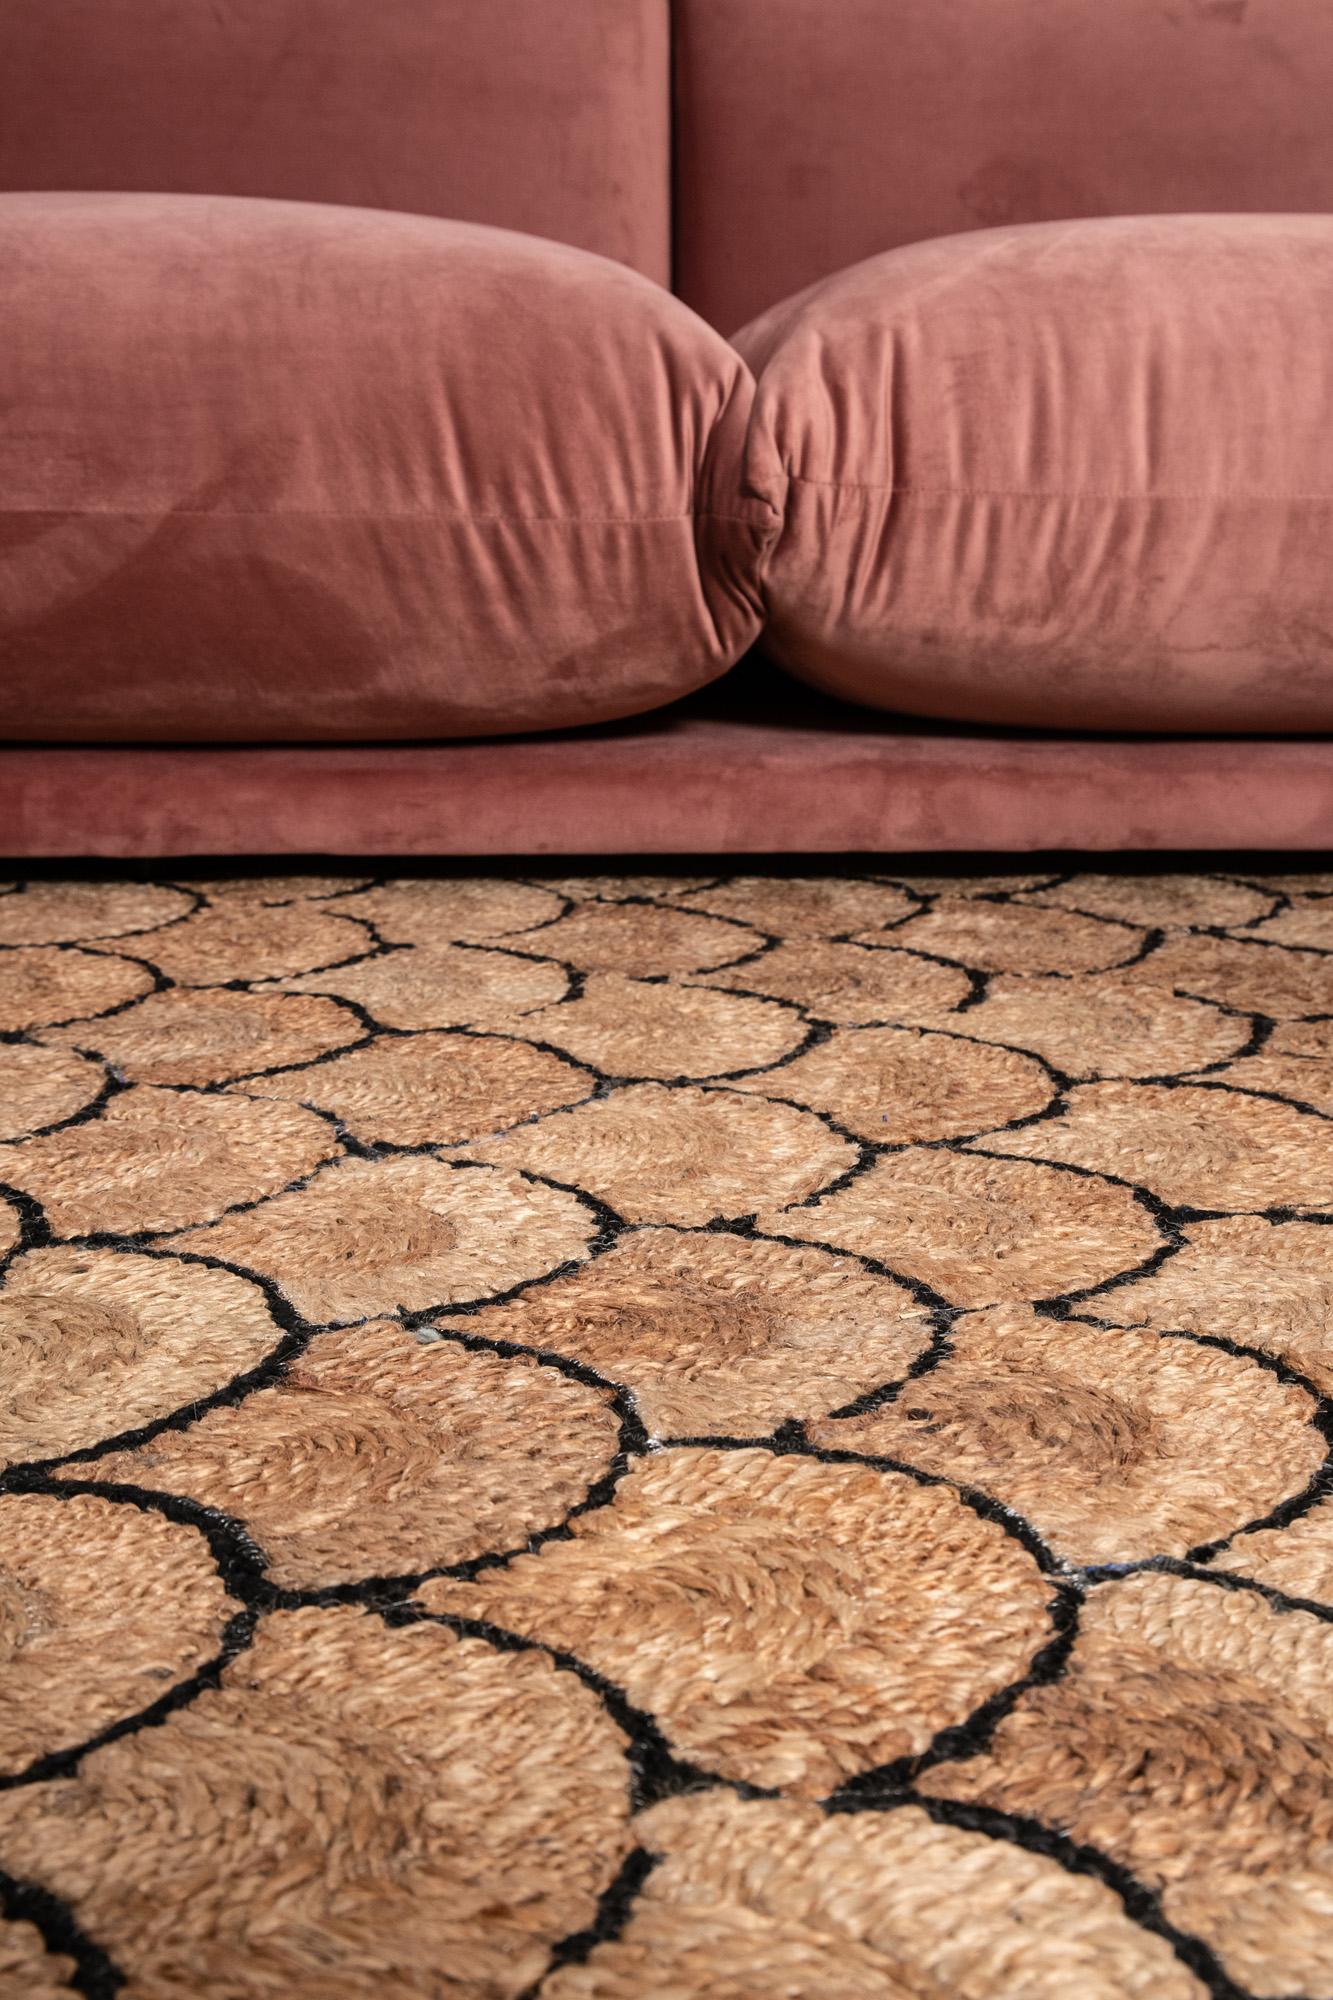 Modern Machine Stitched Jute Carpet Rug Natural Brown & Black Venus 6